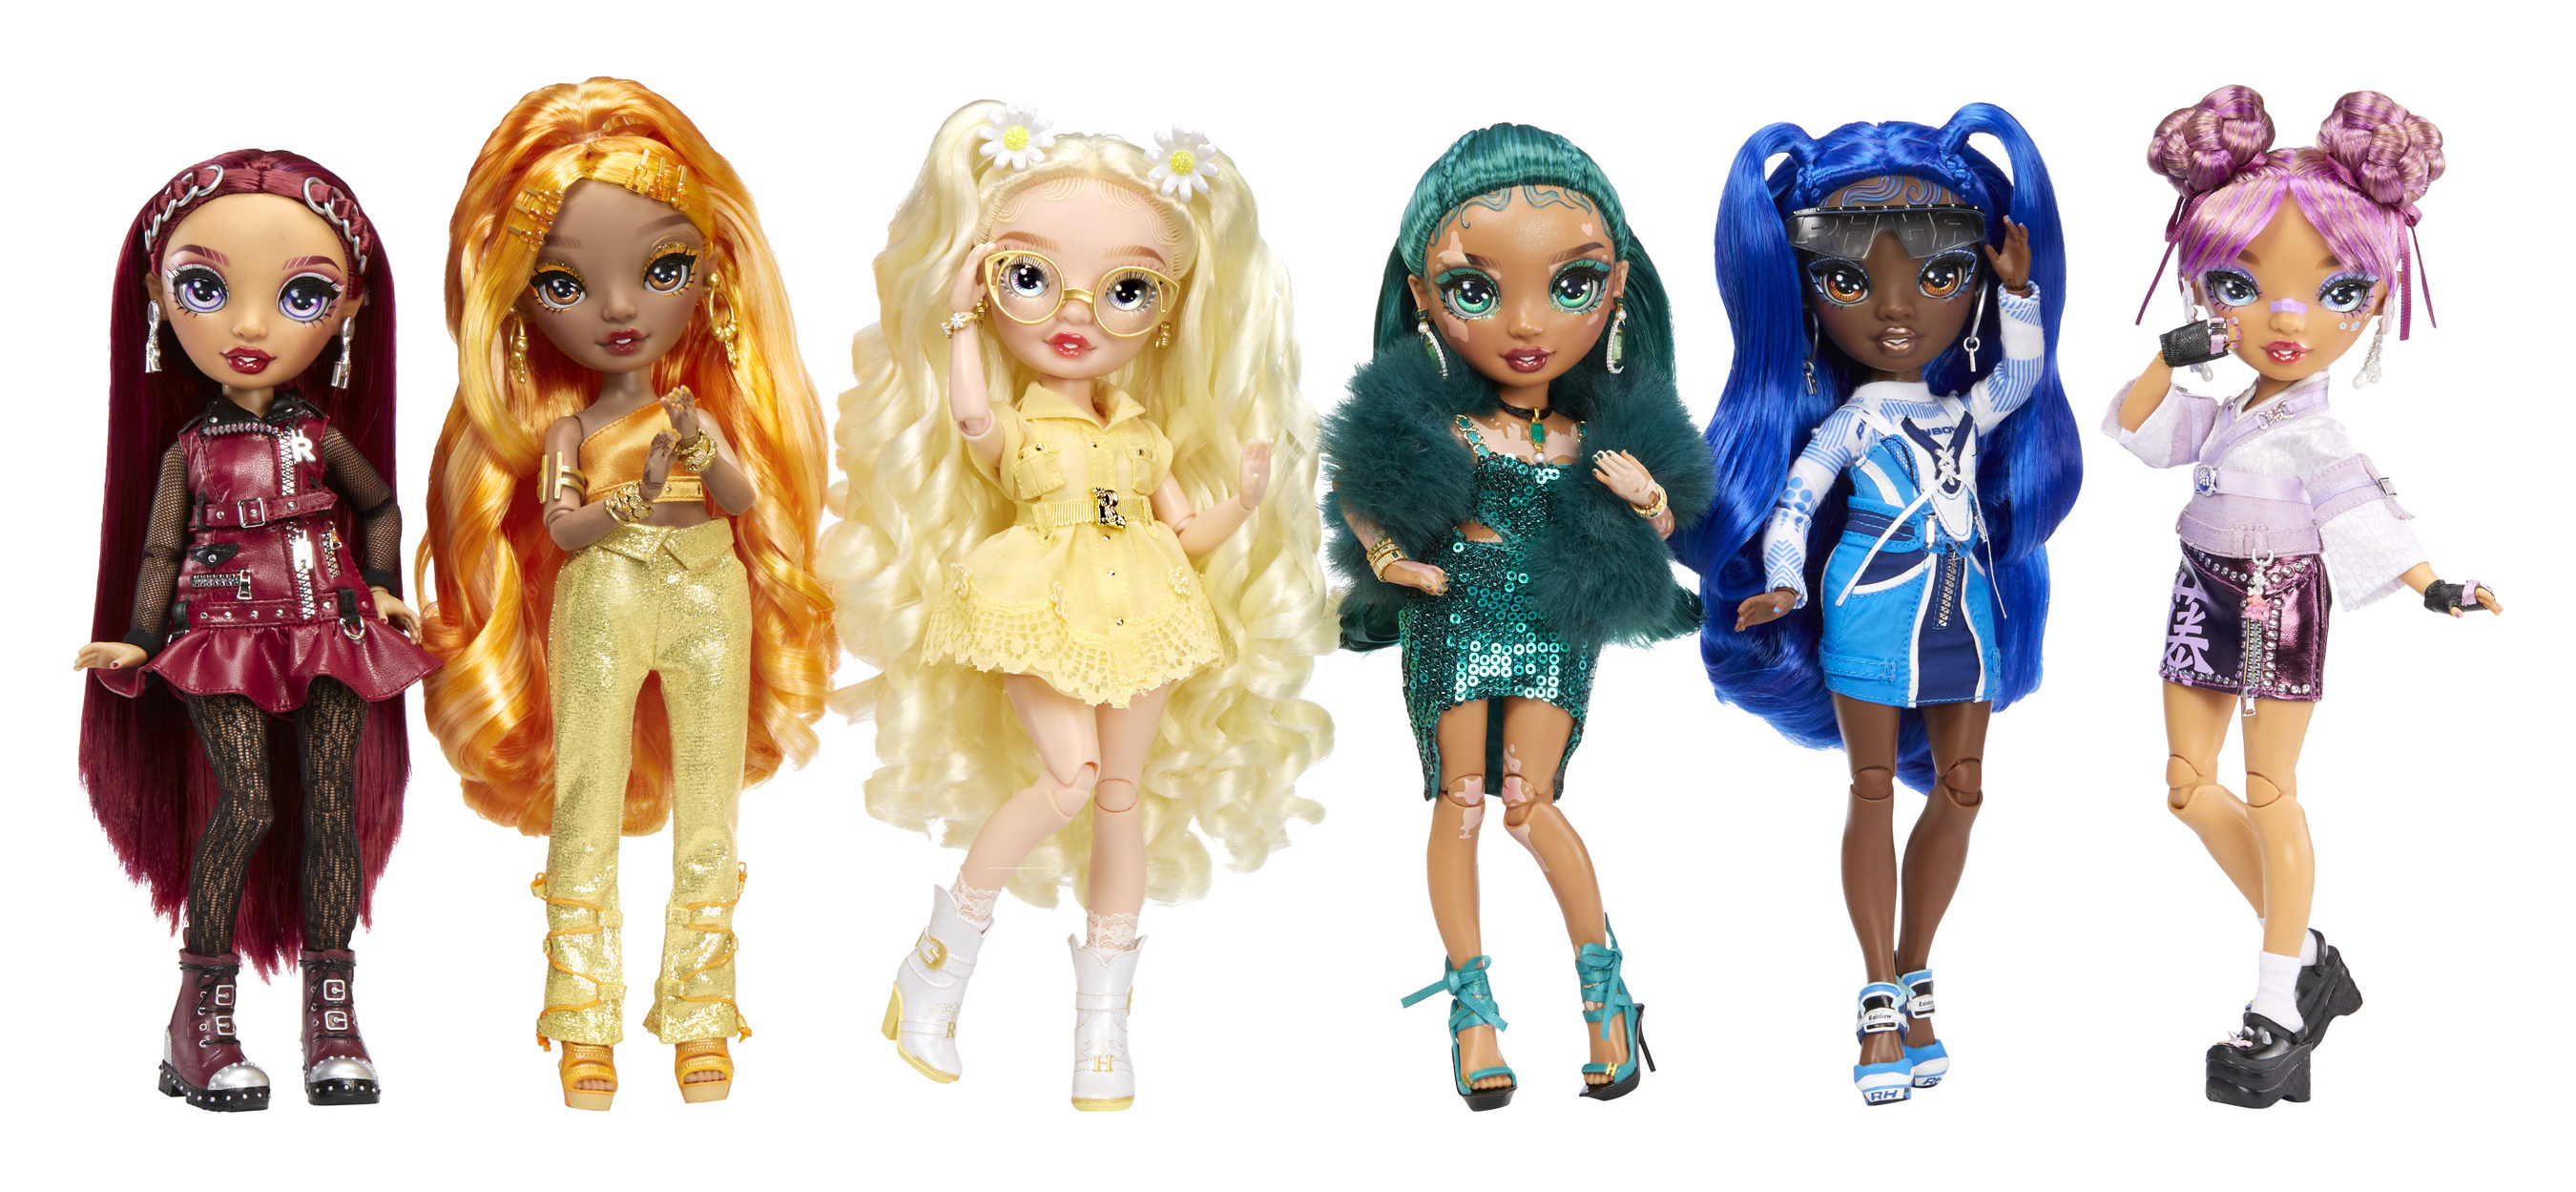 New Rainbow High fashion dolls show their 'true colors,' one has